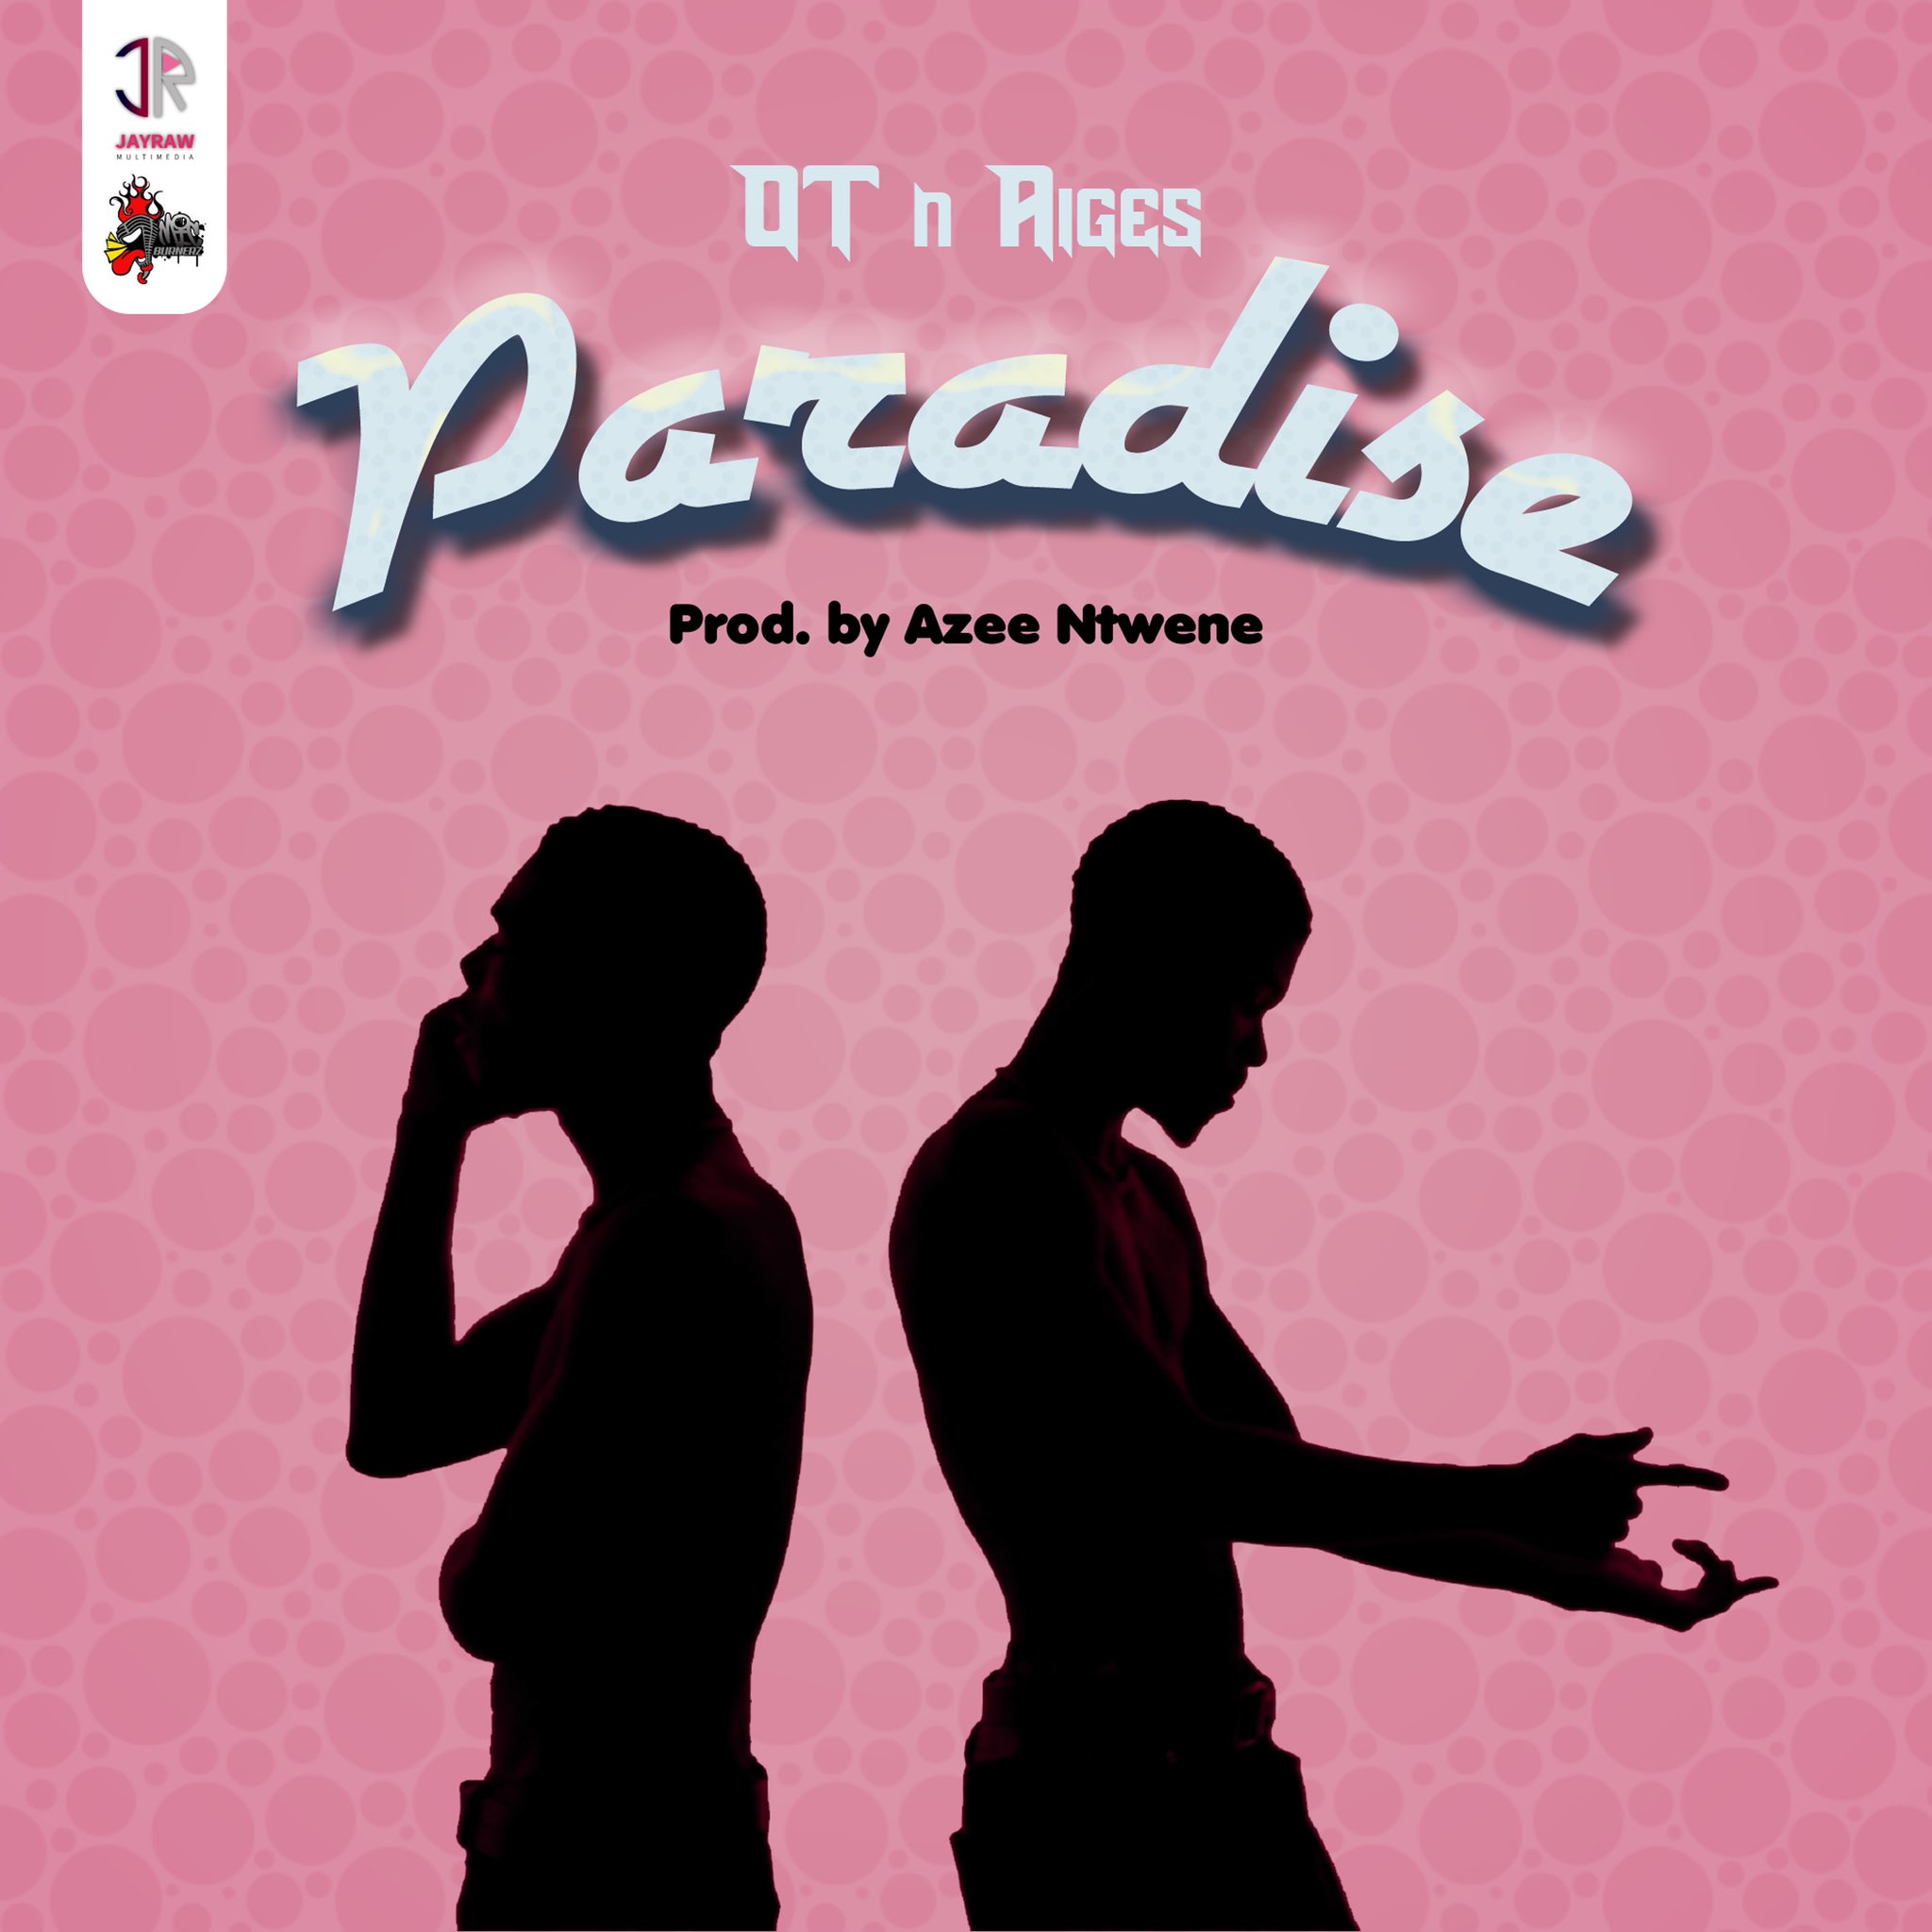 OT n Aiges drop new music titled Paradise